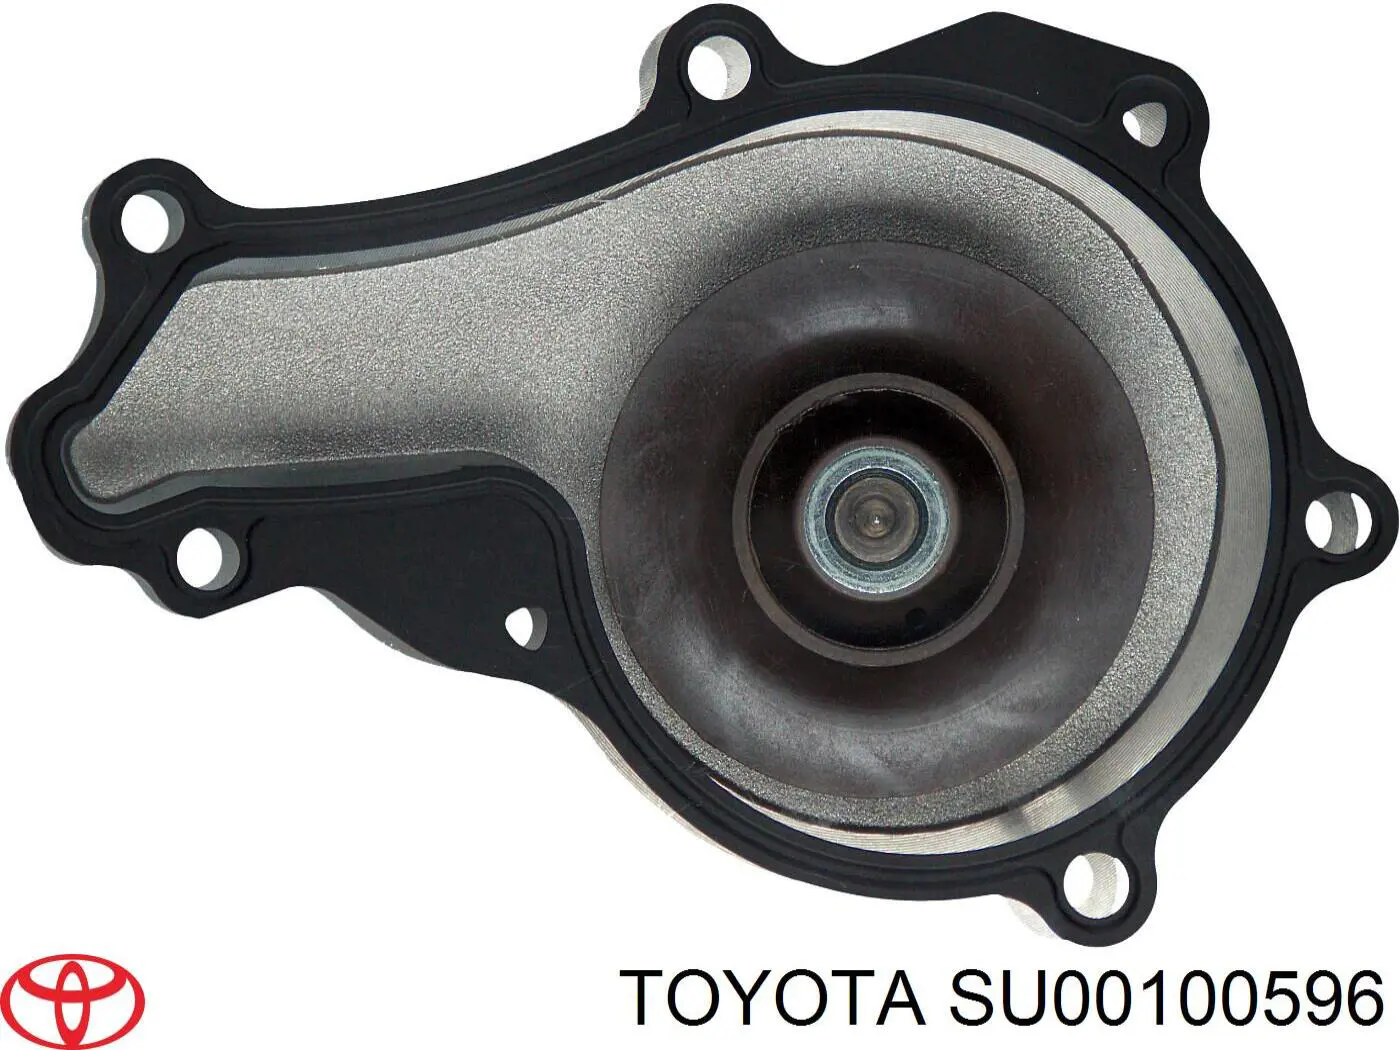 SU00100596 Toyota bomba de agua